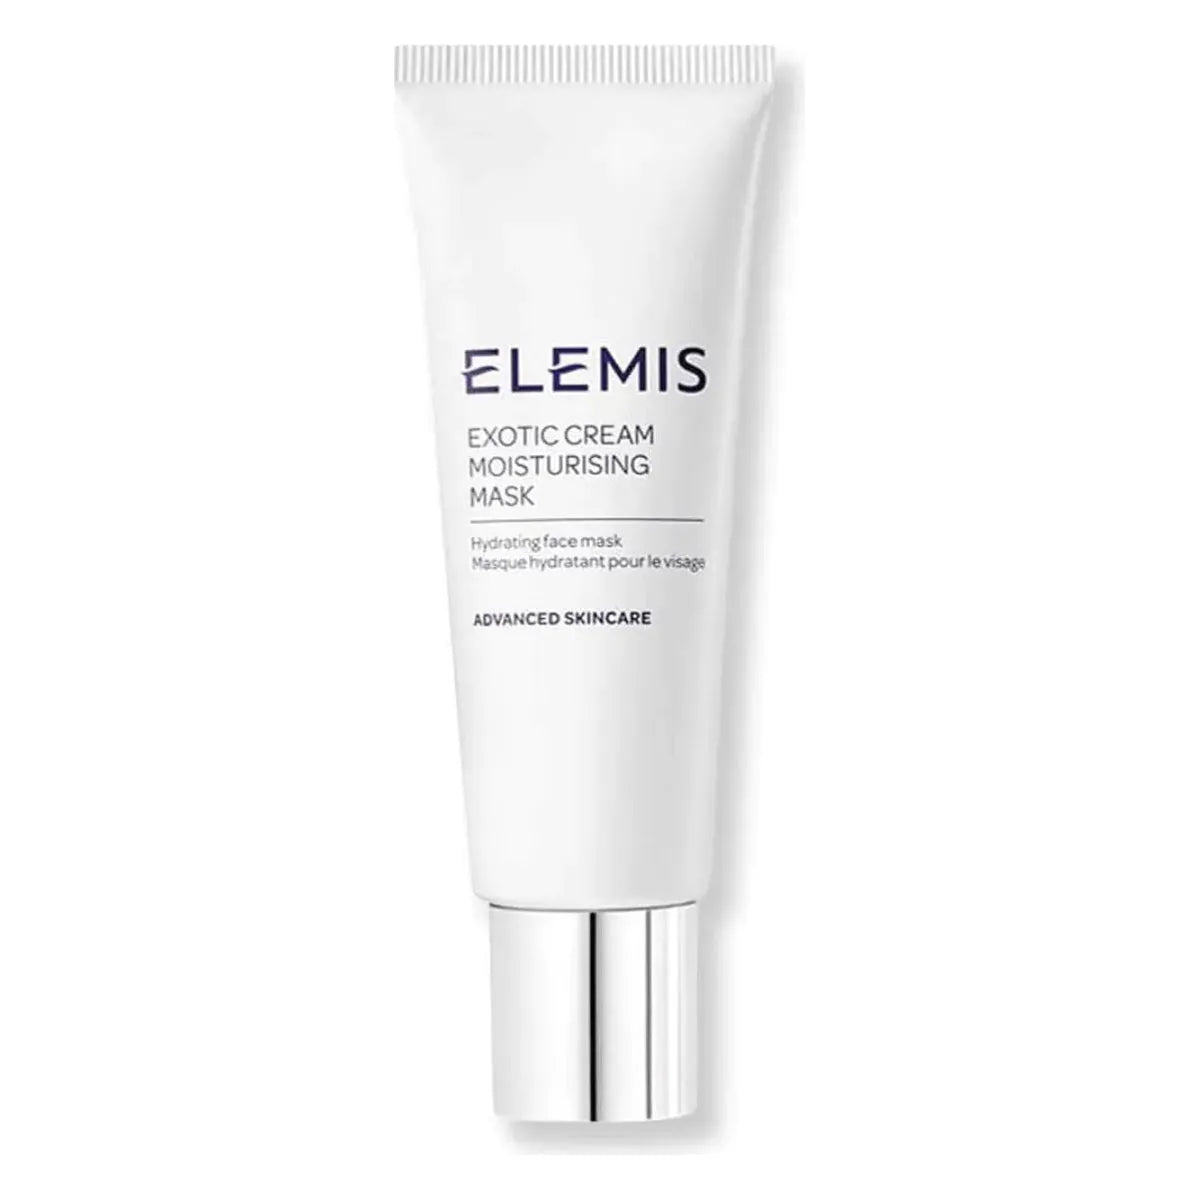 Elemis Exotic Cream Moisturising Mask 75 ml - DG International Ventures Limited